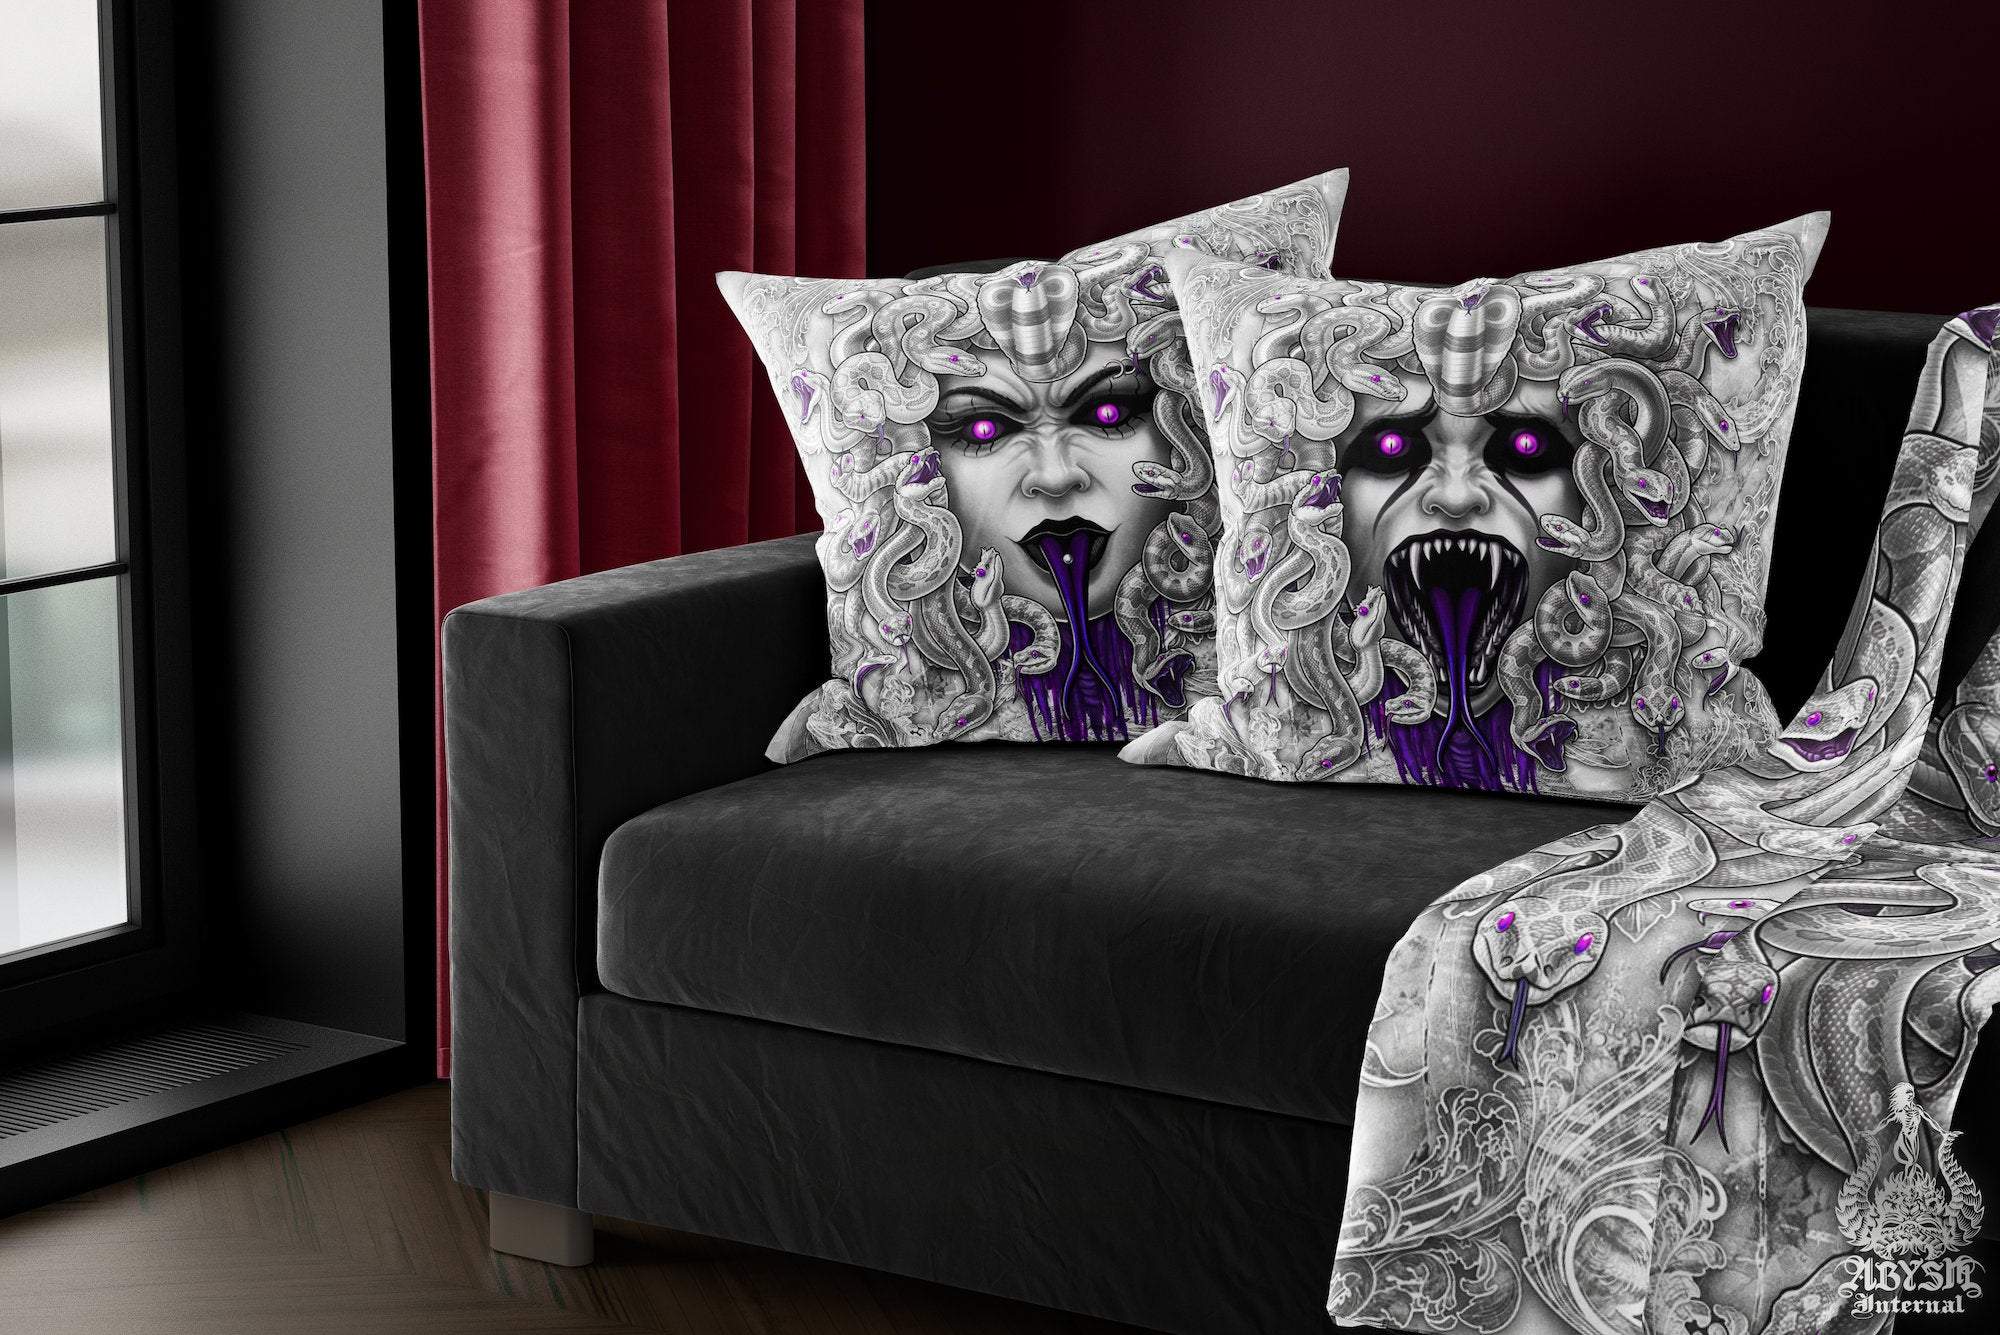 Horror Throw Pillow, Decorative Accent Cushion, Gothic Room Decor, Gamer Room Decor, Alternative Home - Medusa, White Goth & Purple Snakes, Mock - Abysm Internal